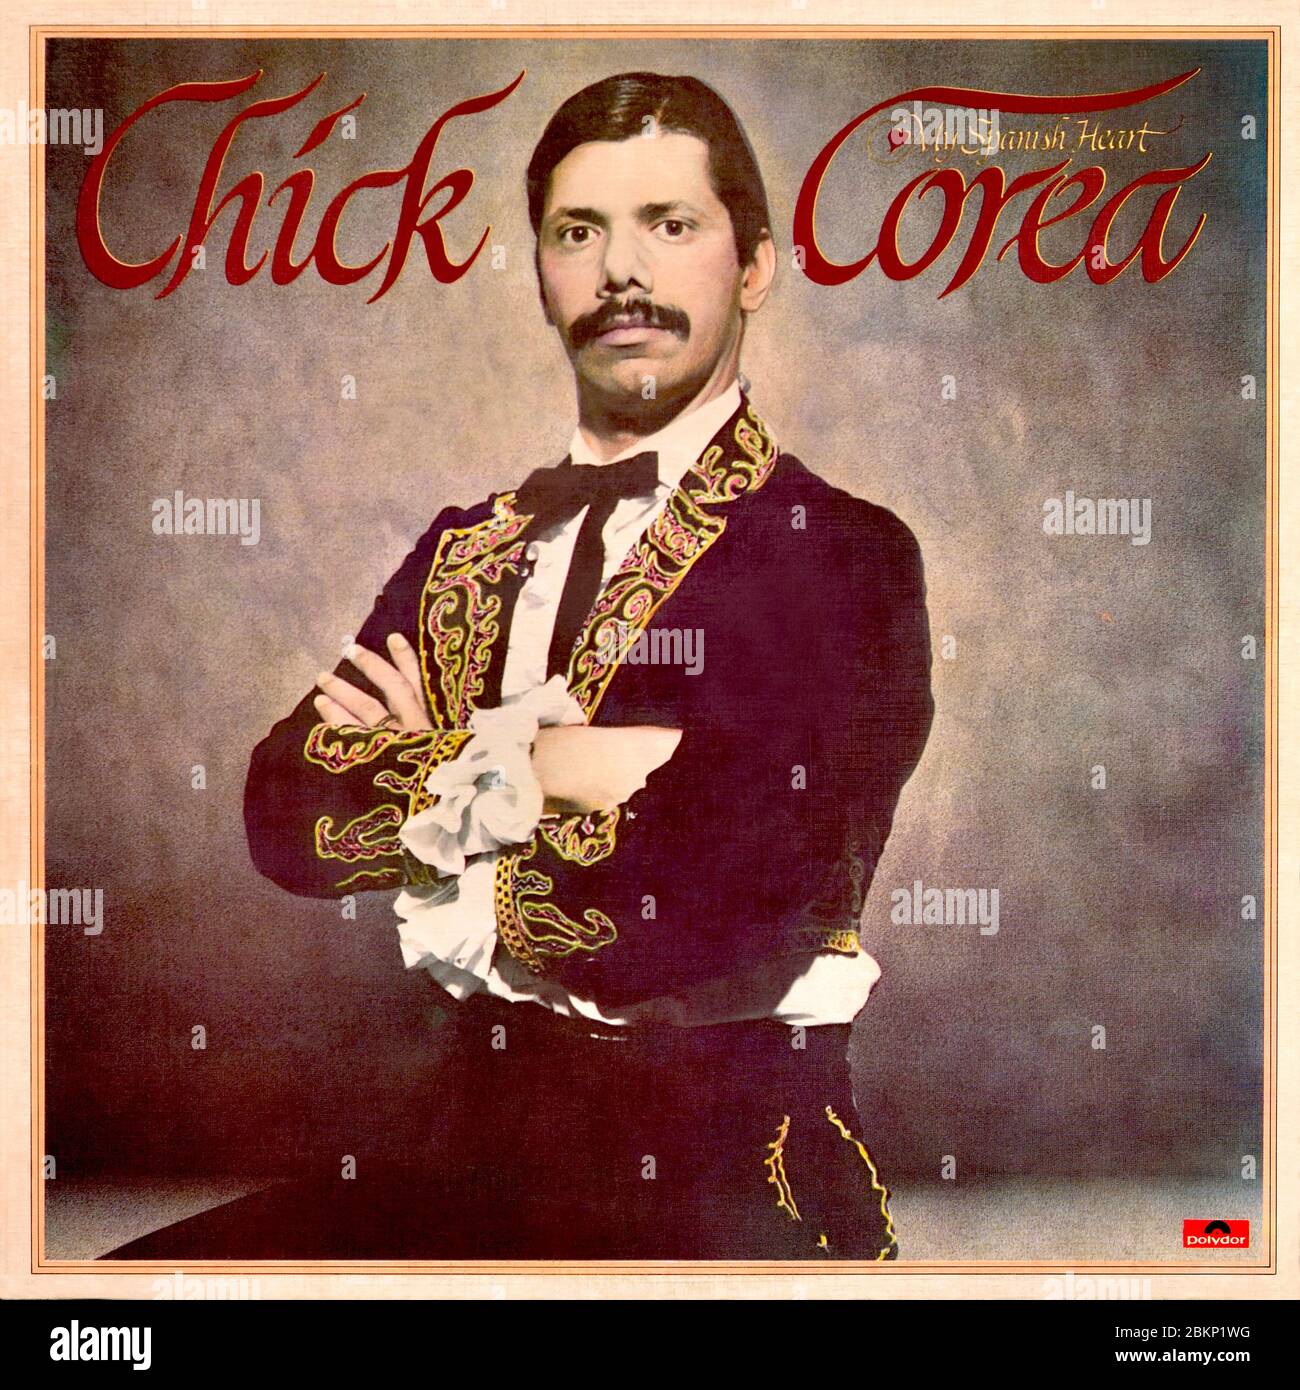 Chick Corea - original vinyl album cover - My Spanish Heart - 1986 Stock Photo